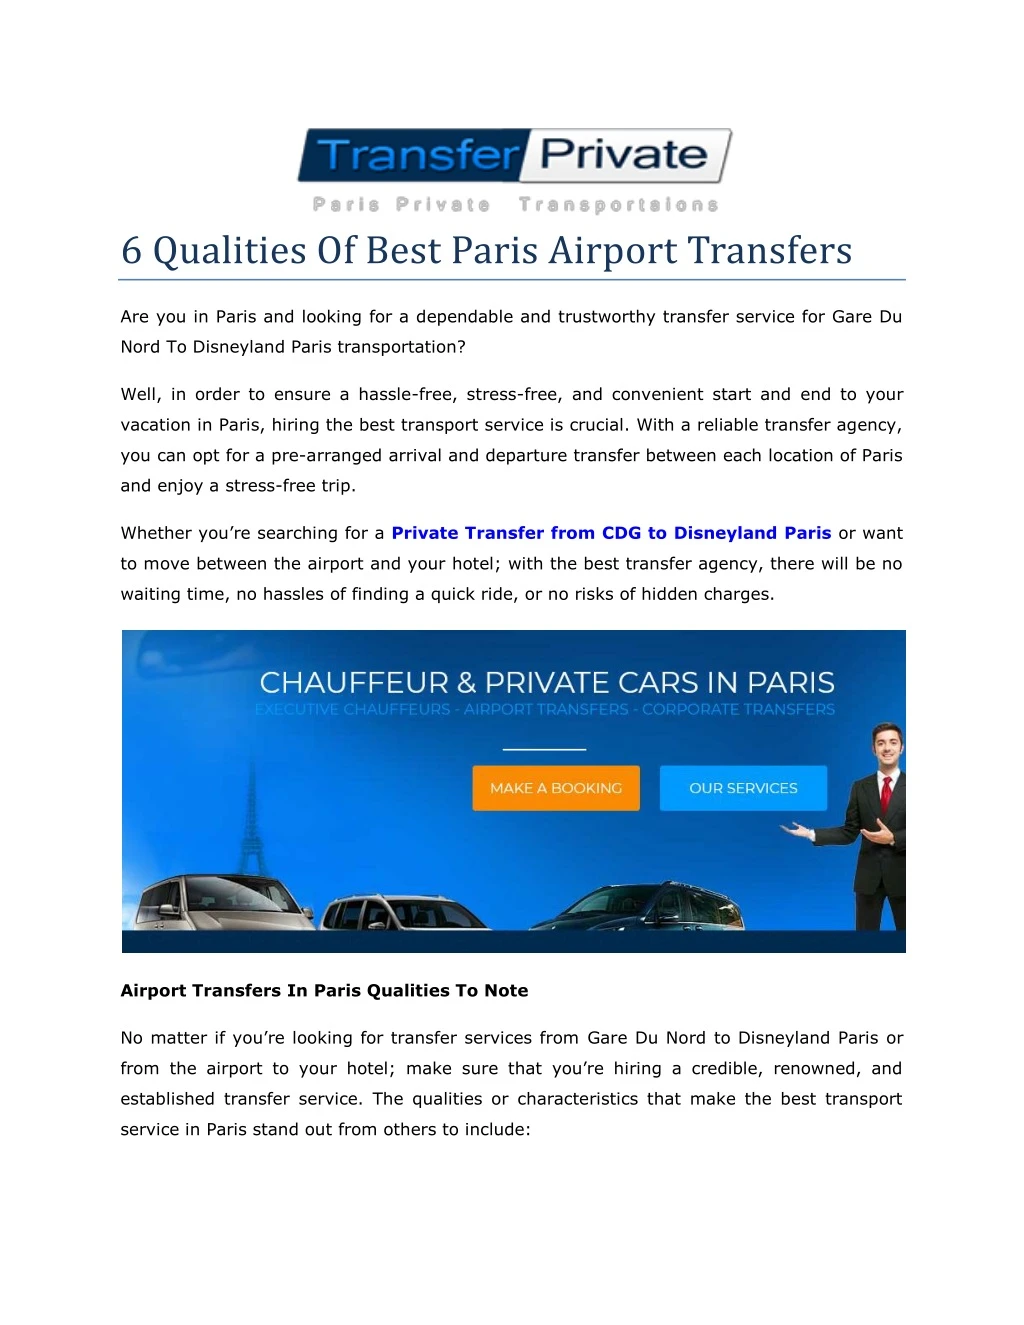 6 qualities of best paris airport transfers